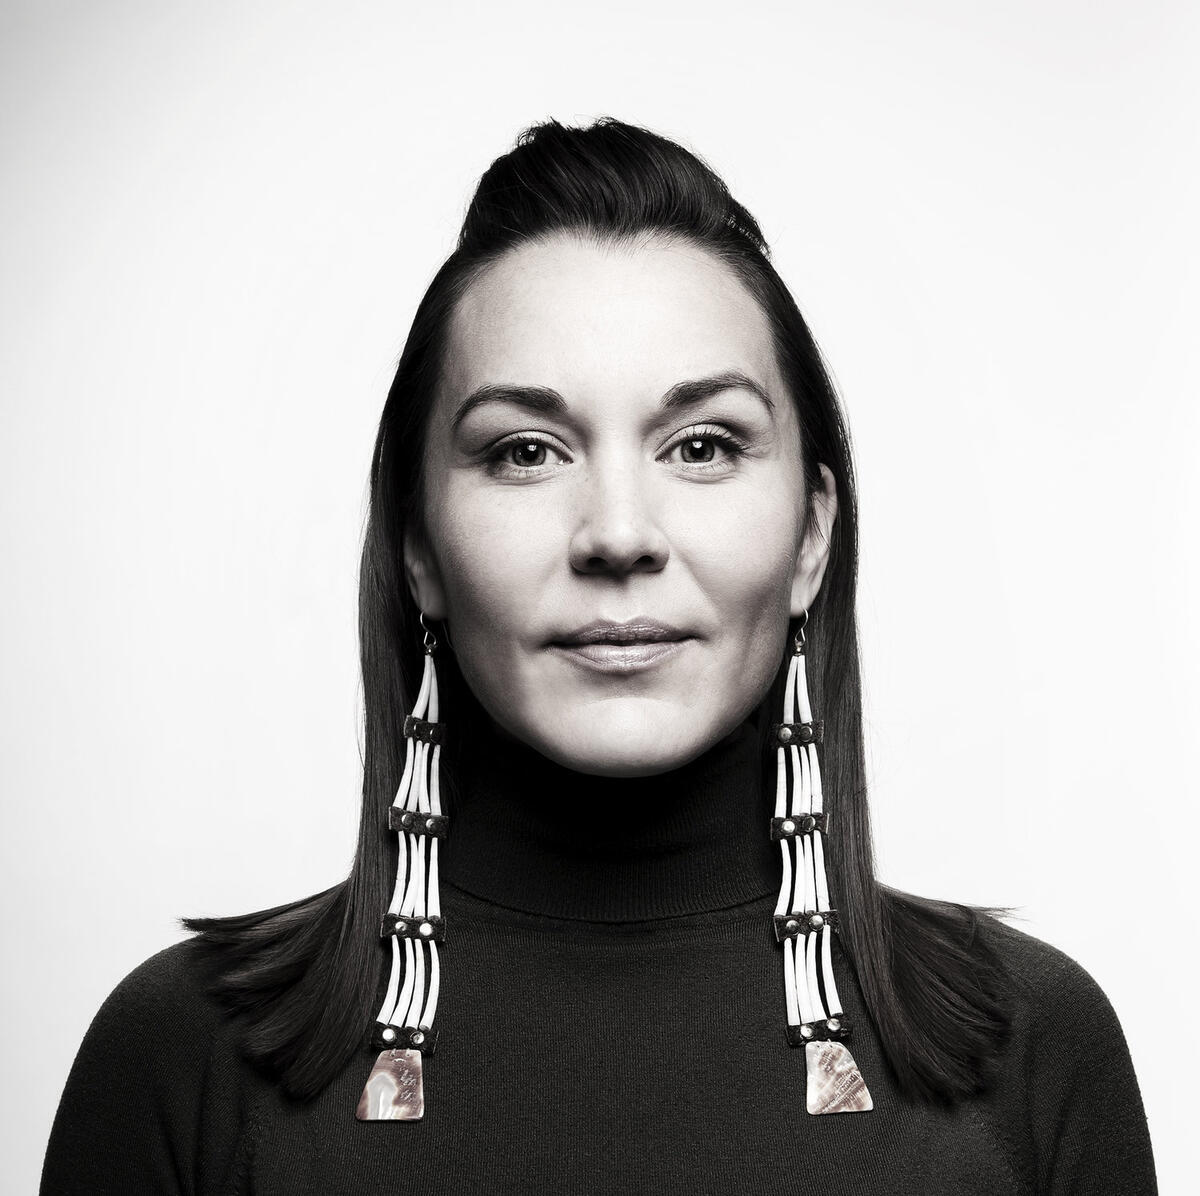 Black and white headshot of Cara Romero, wearing long earrings